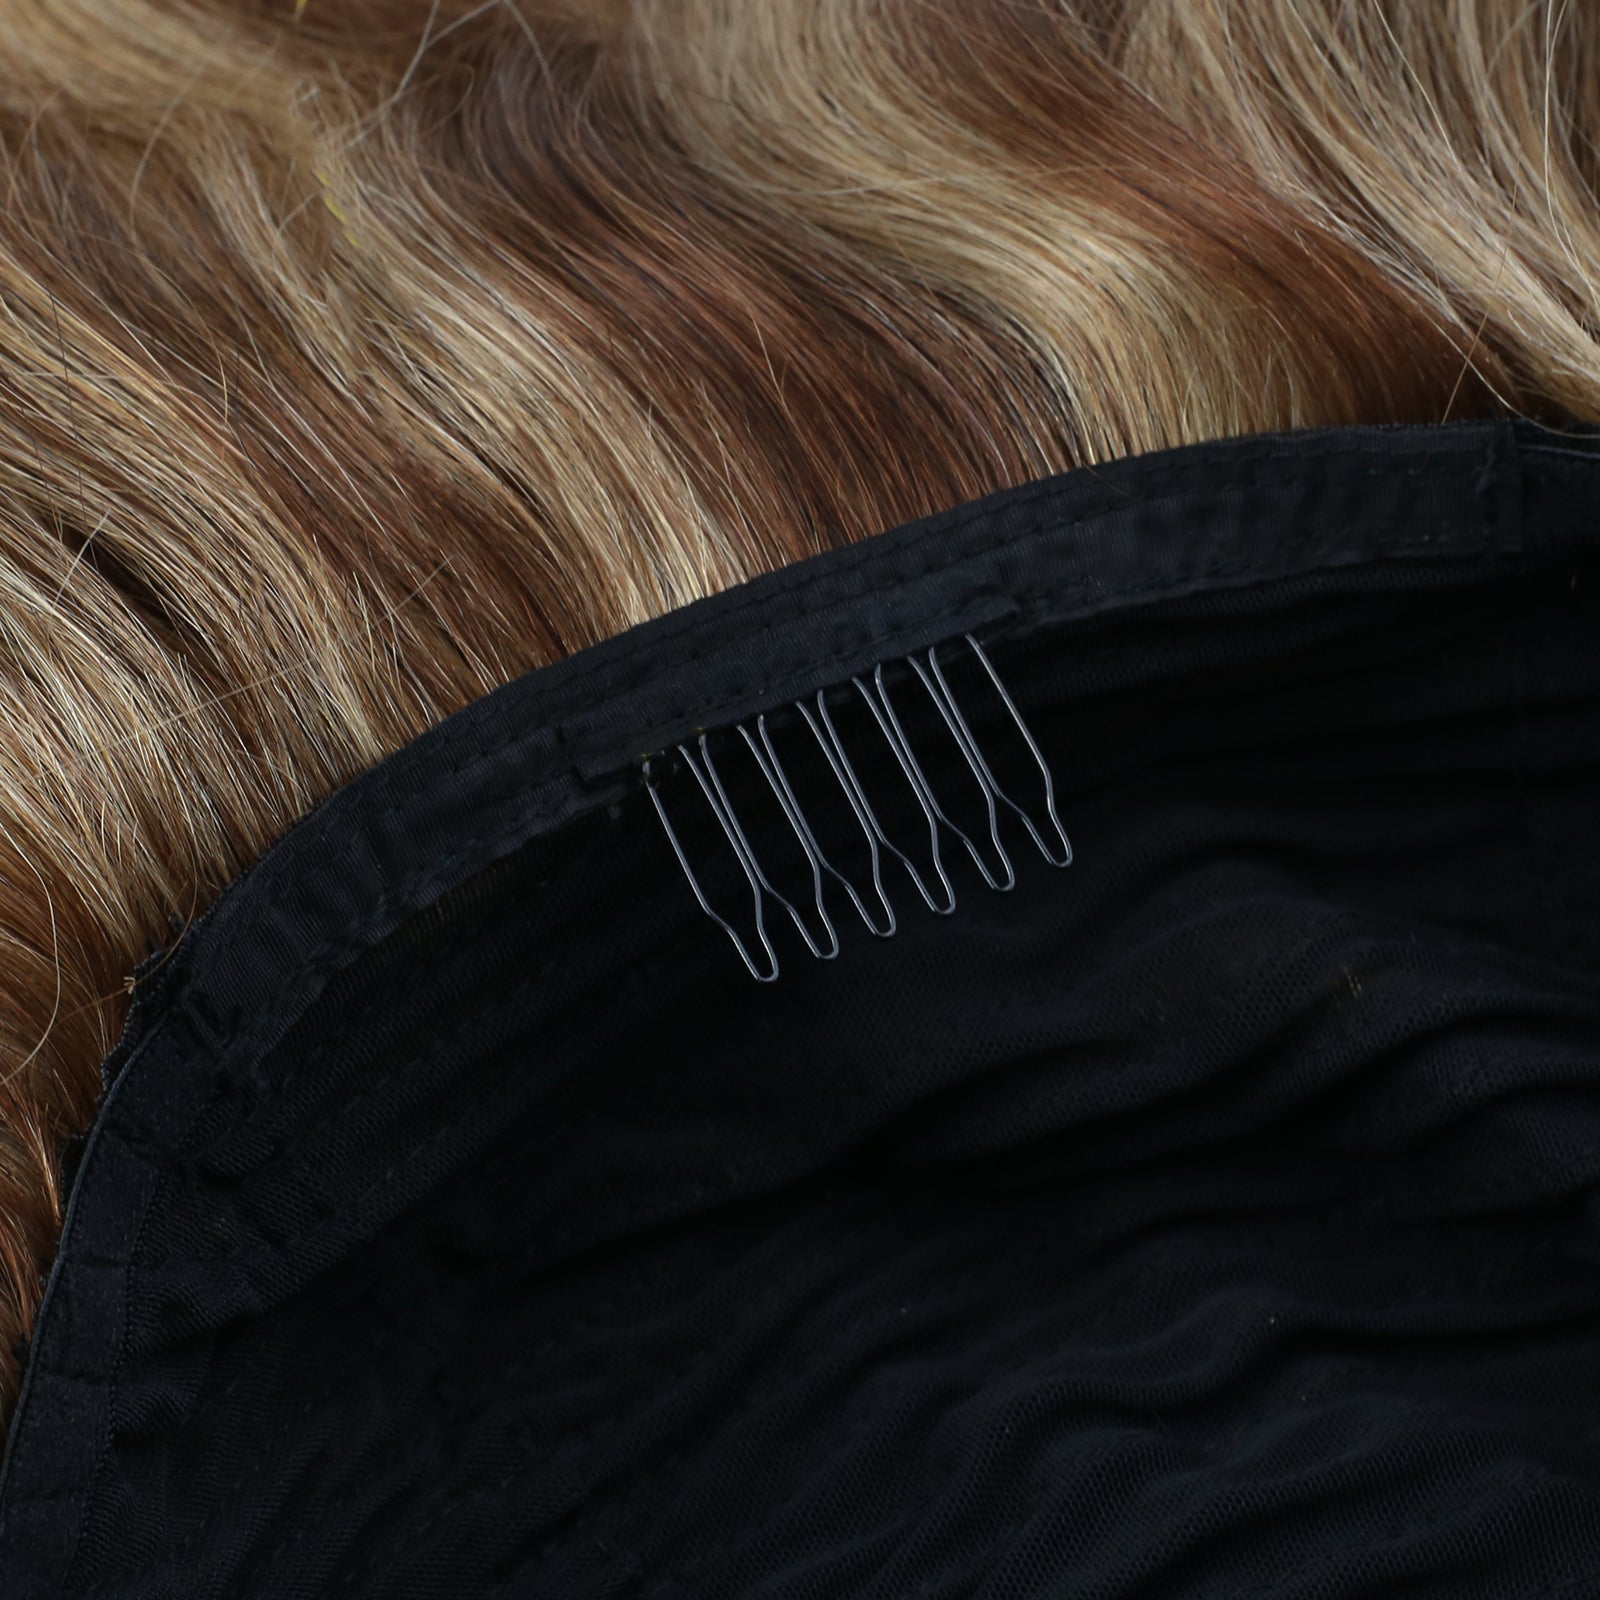 Fshine Body Wave Headband Wigs for Women #2P/6 - FShine Shop